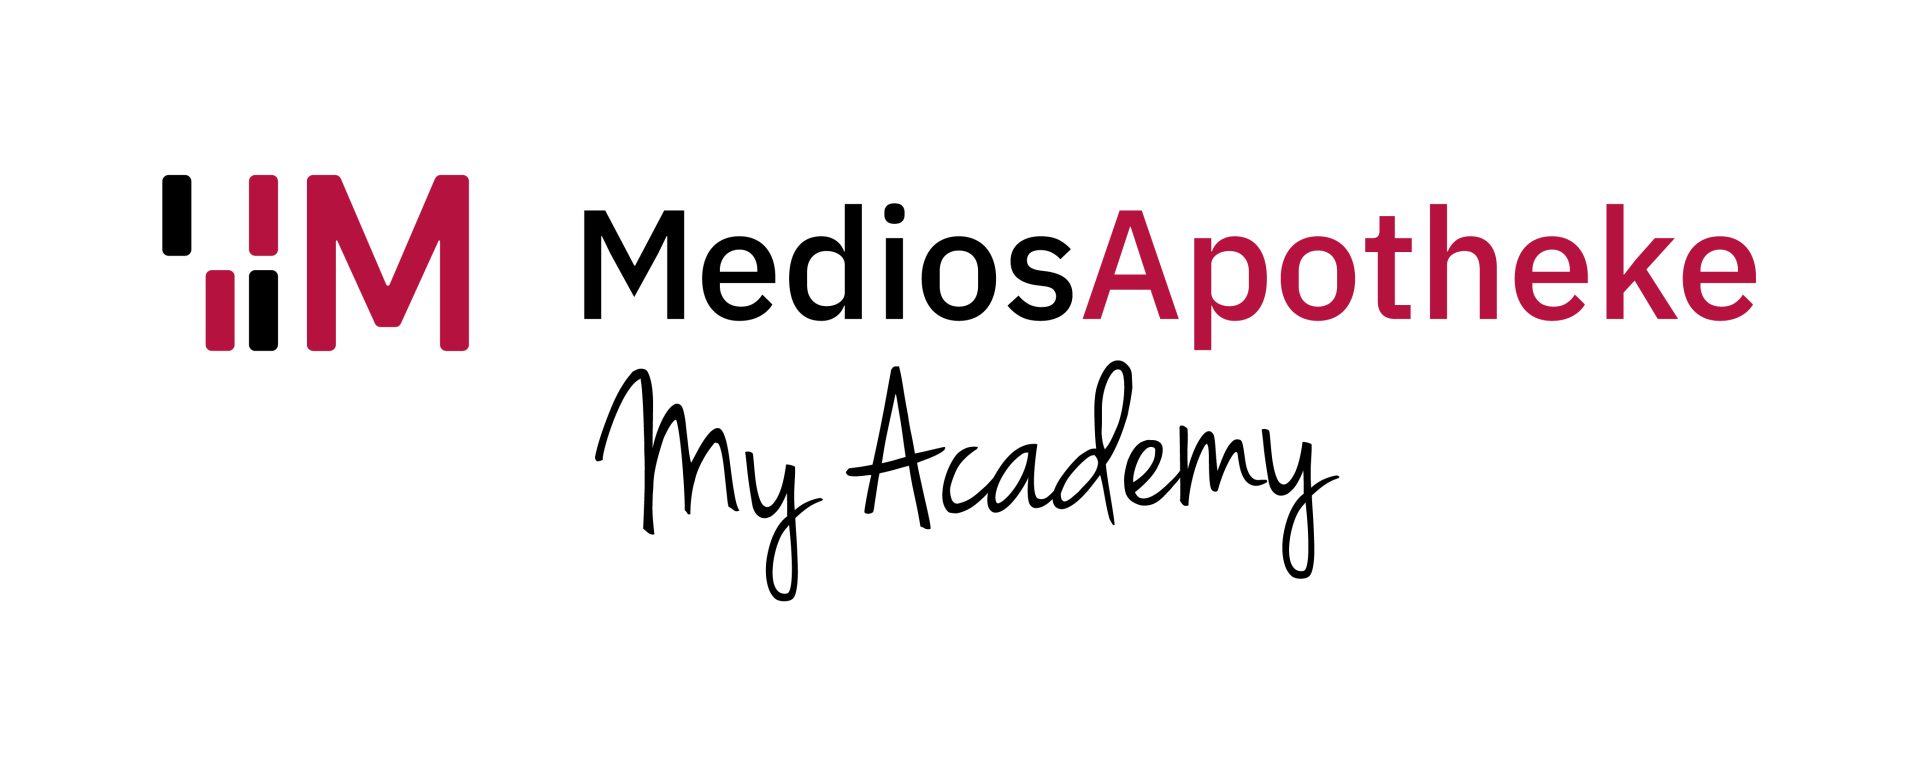 MediosApotheke MyAcademy Logo